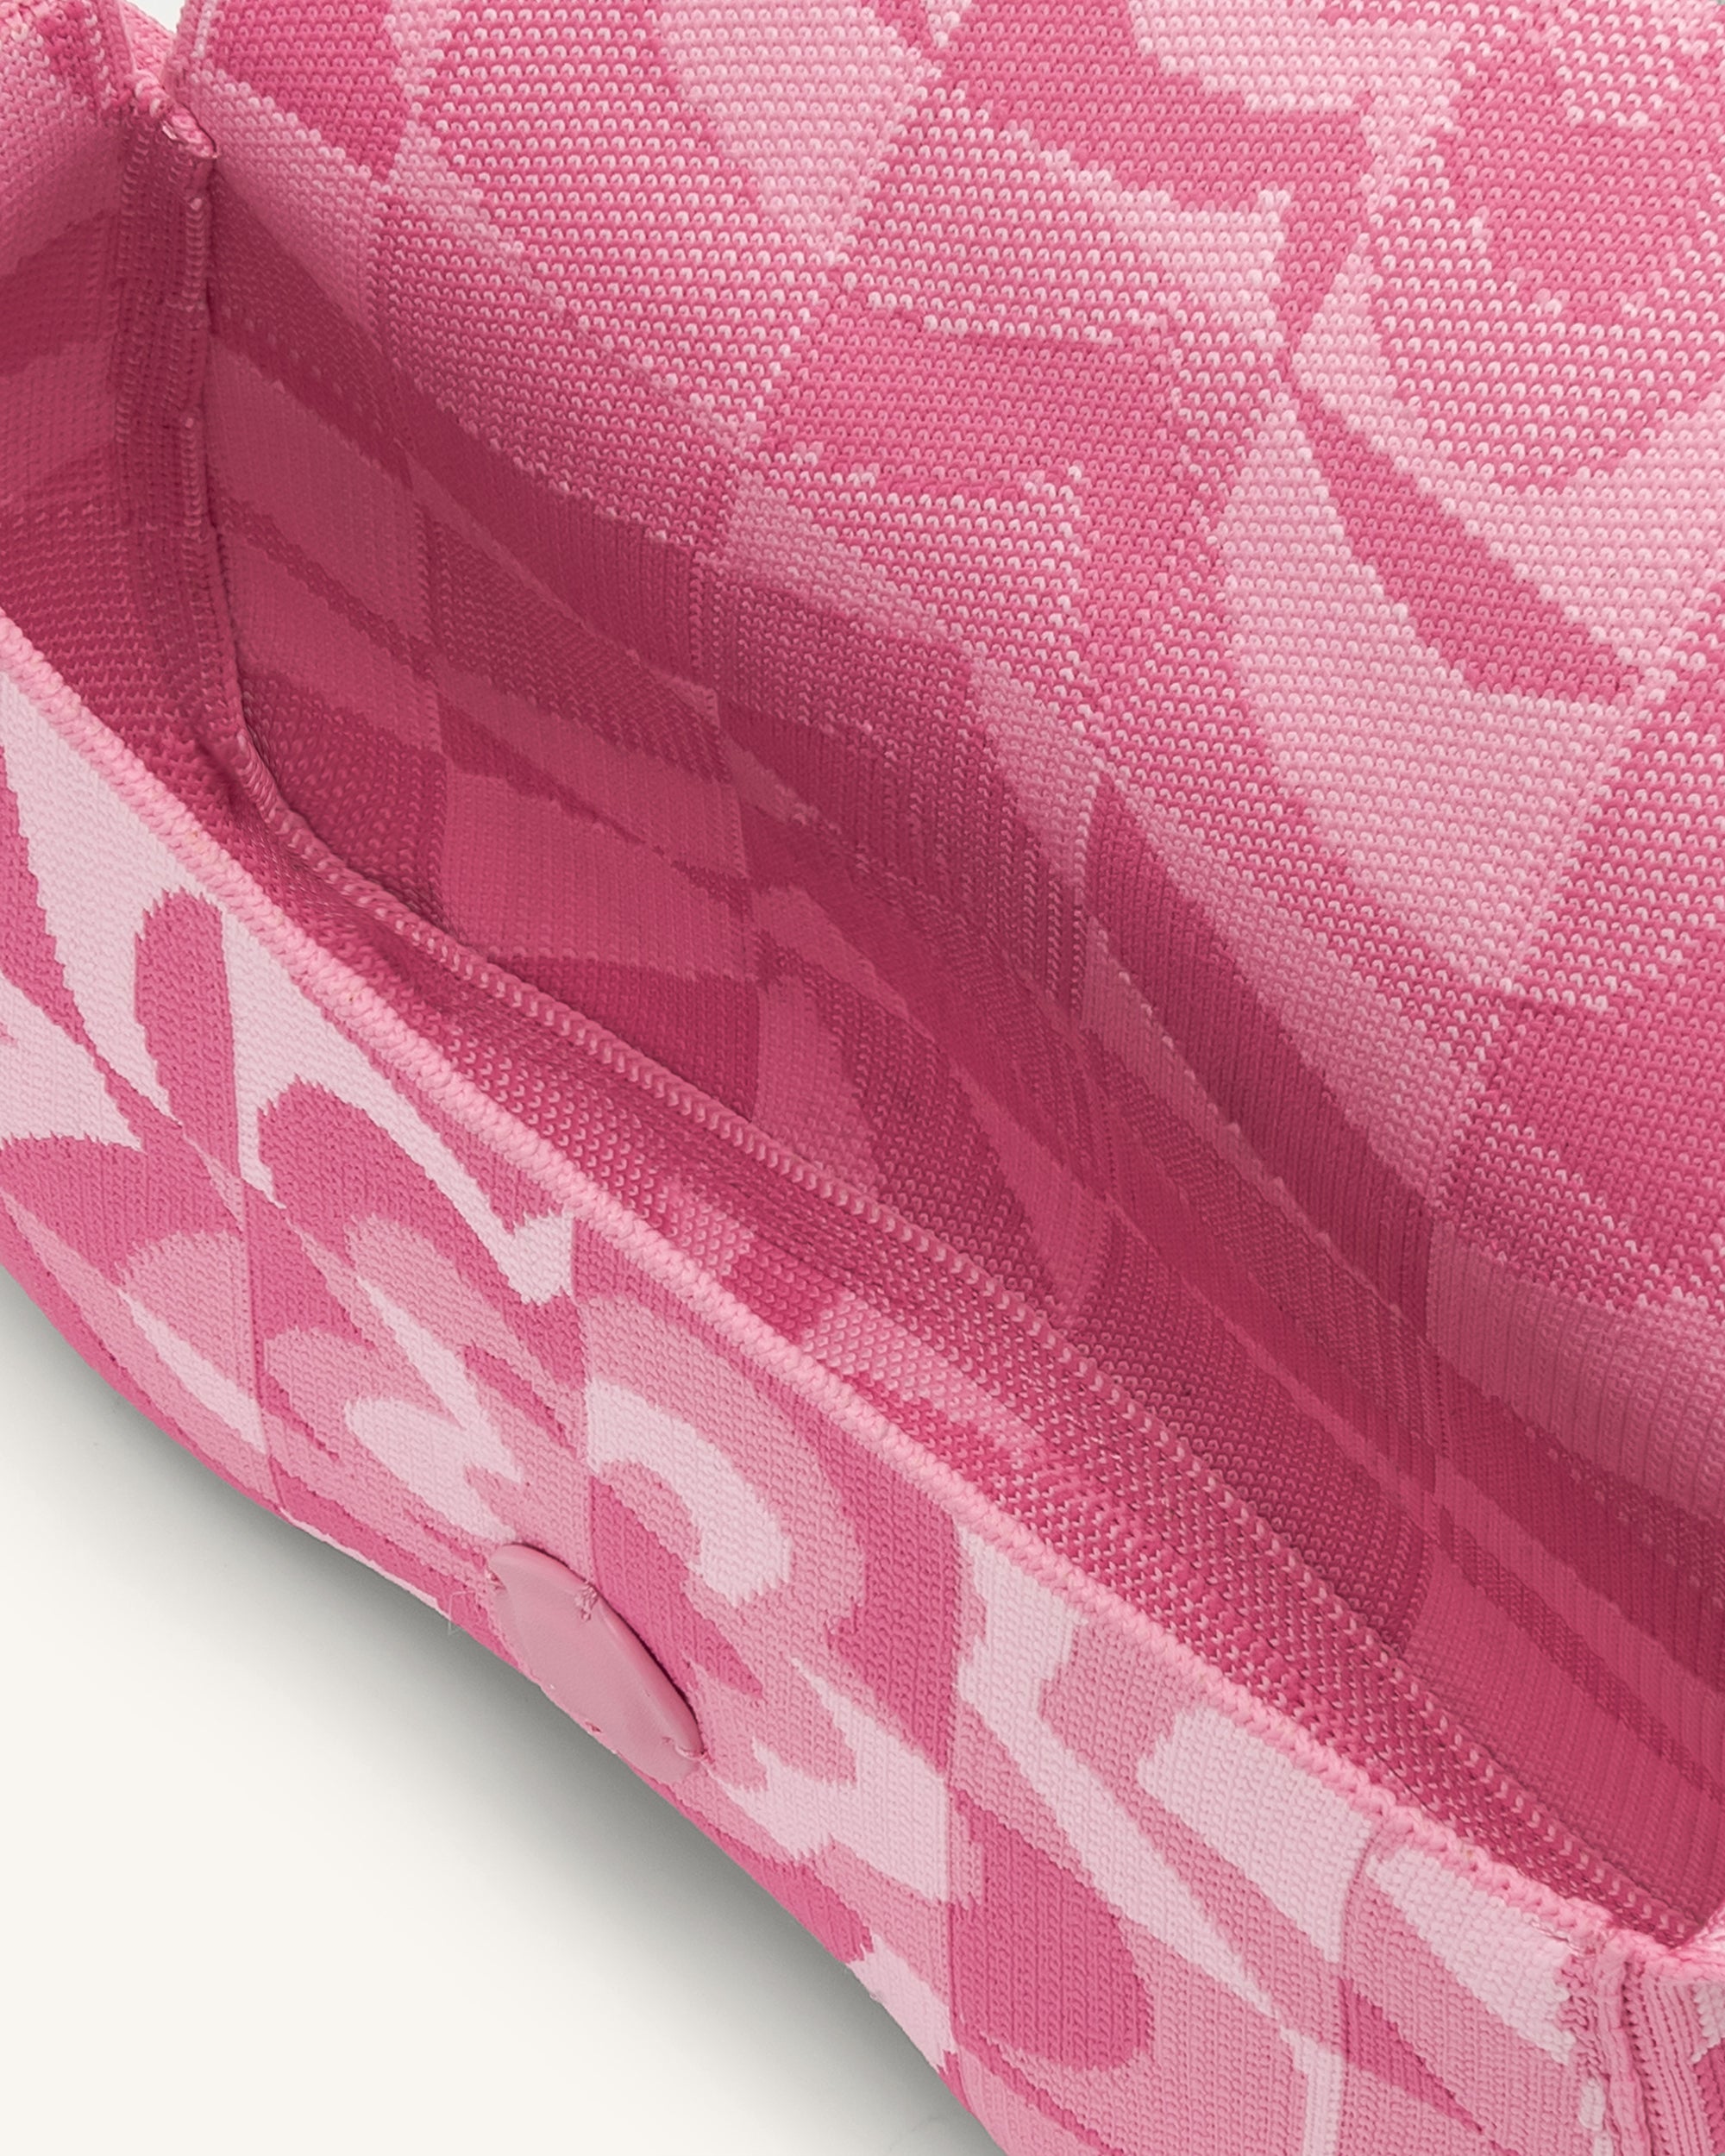 Woven Knot Bag Pink – J. Spencer